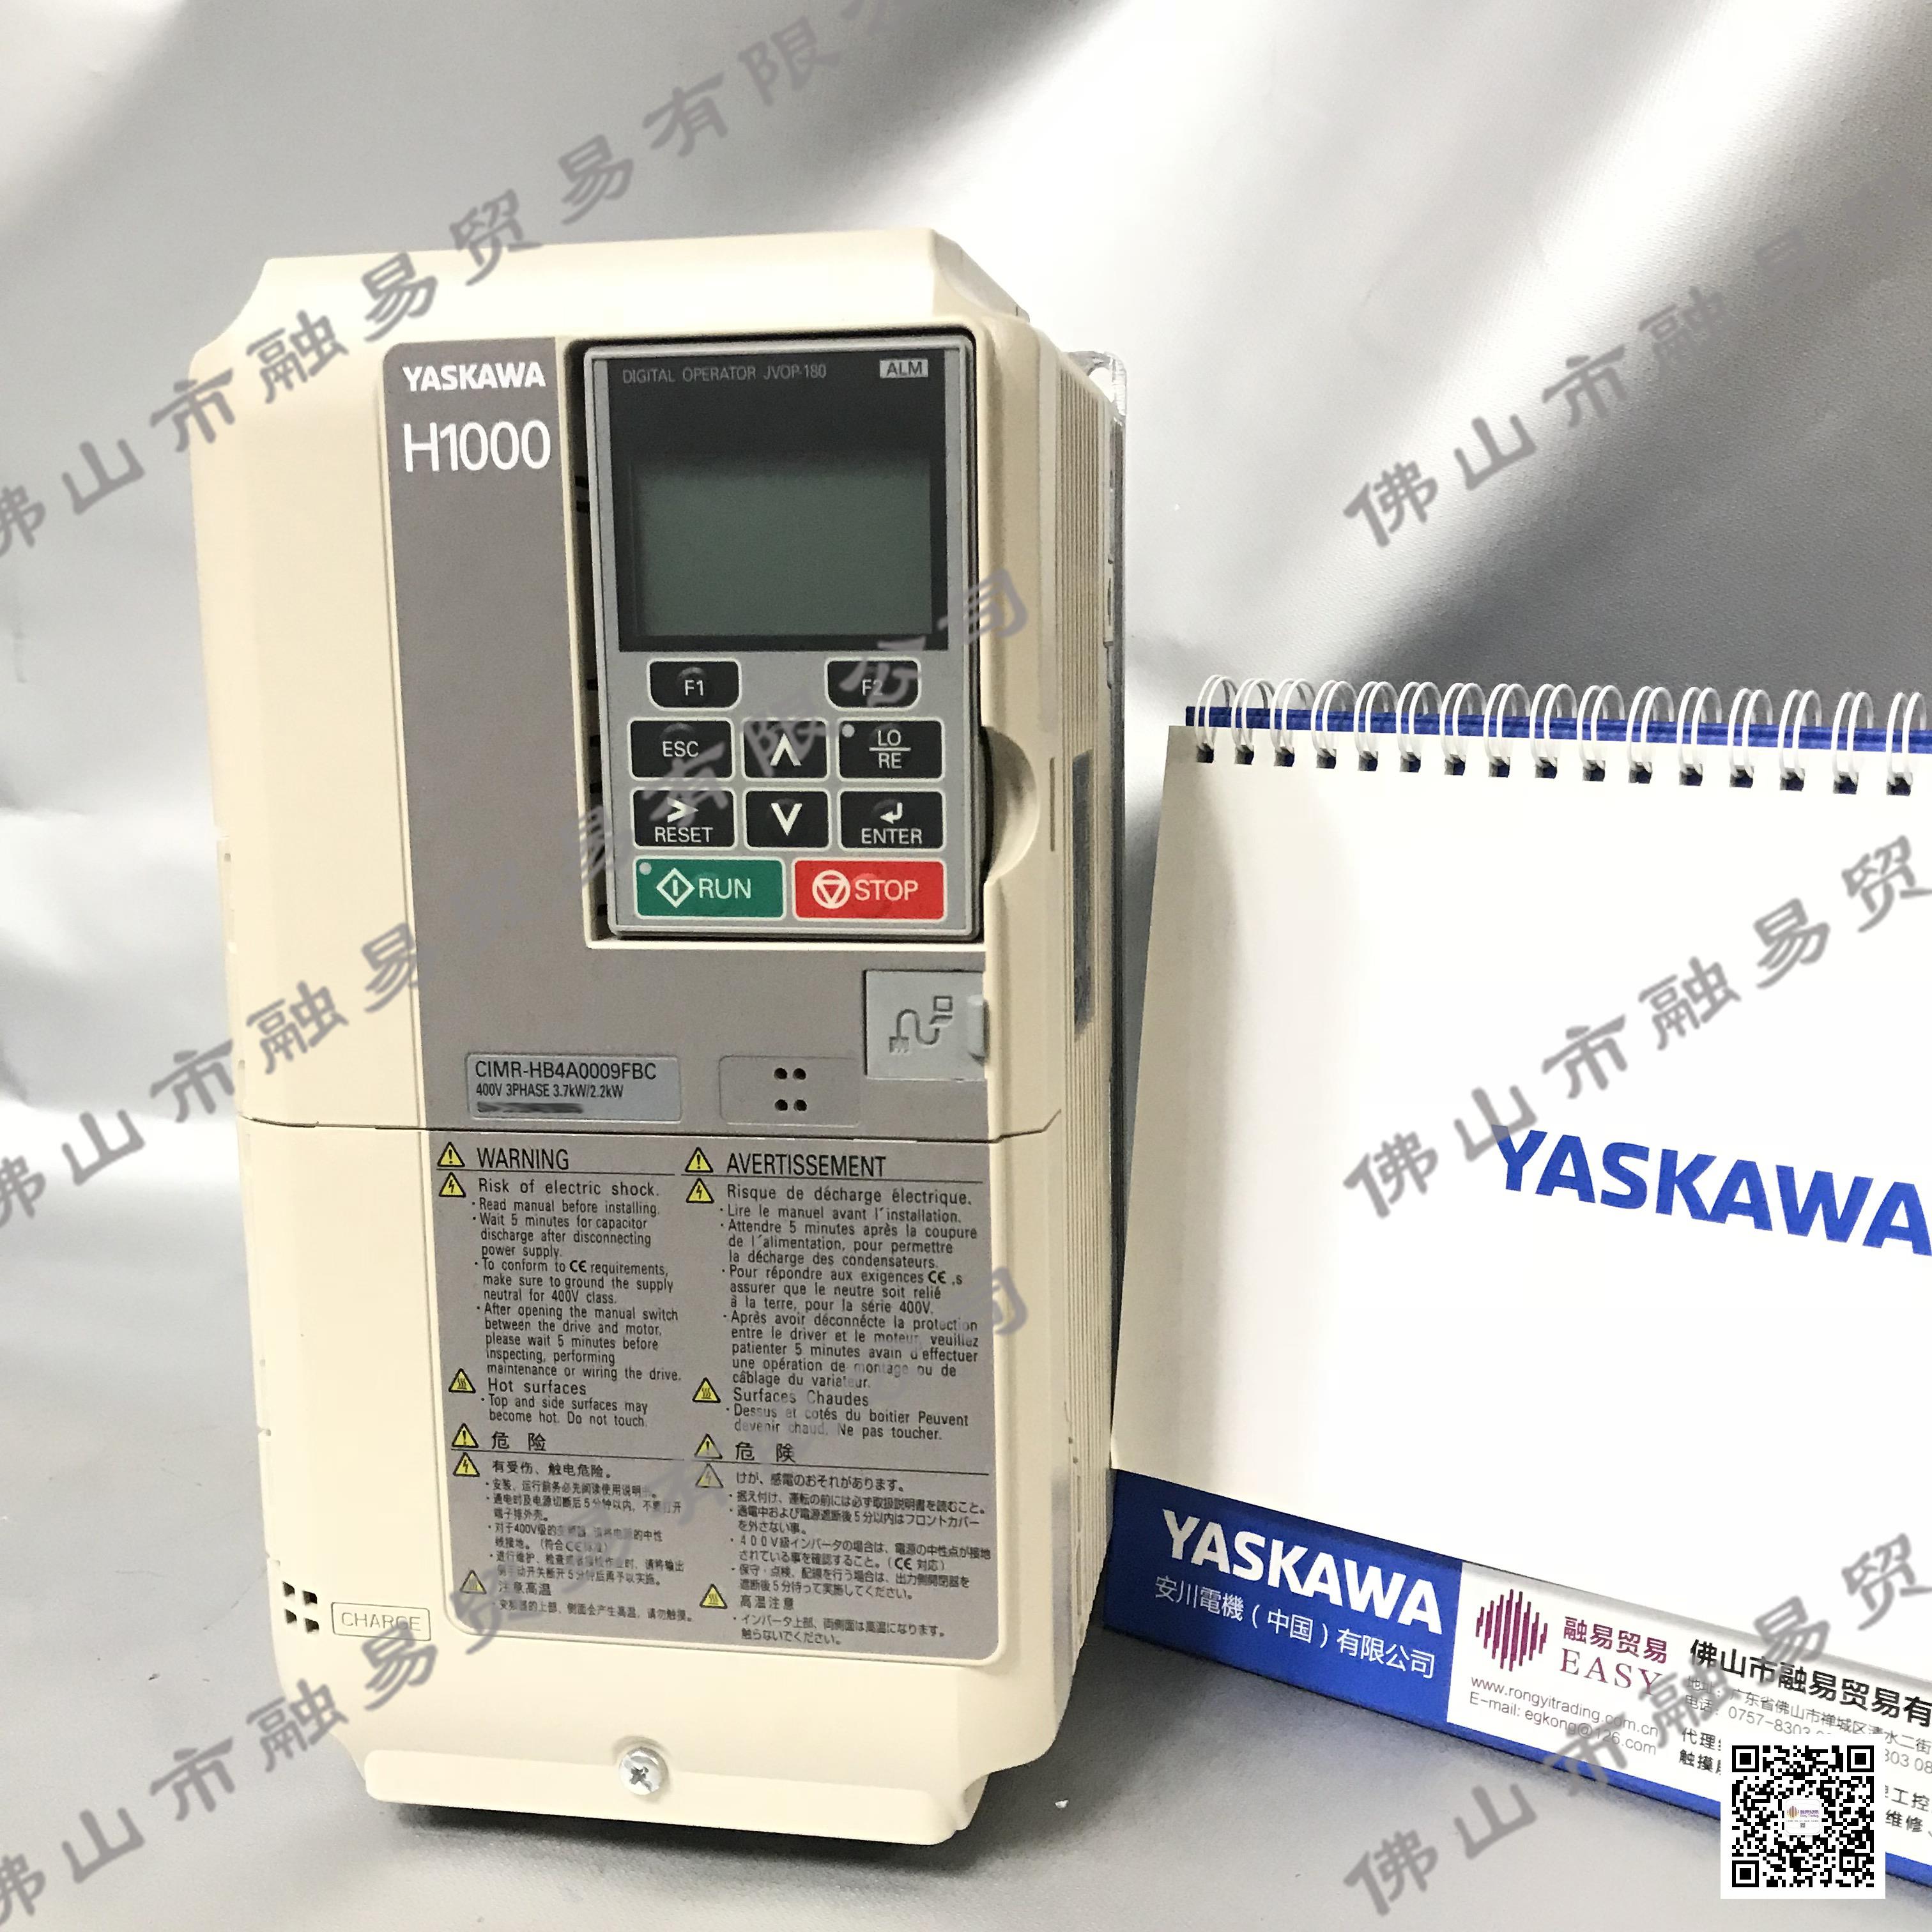 安川CIMR-HB4A0009FAA/FBC/FAC YASKAWA变频器H1000 2.2KW